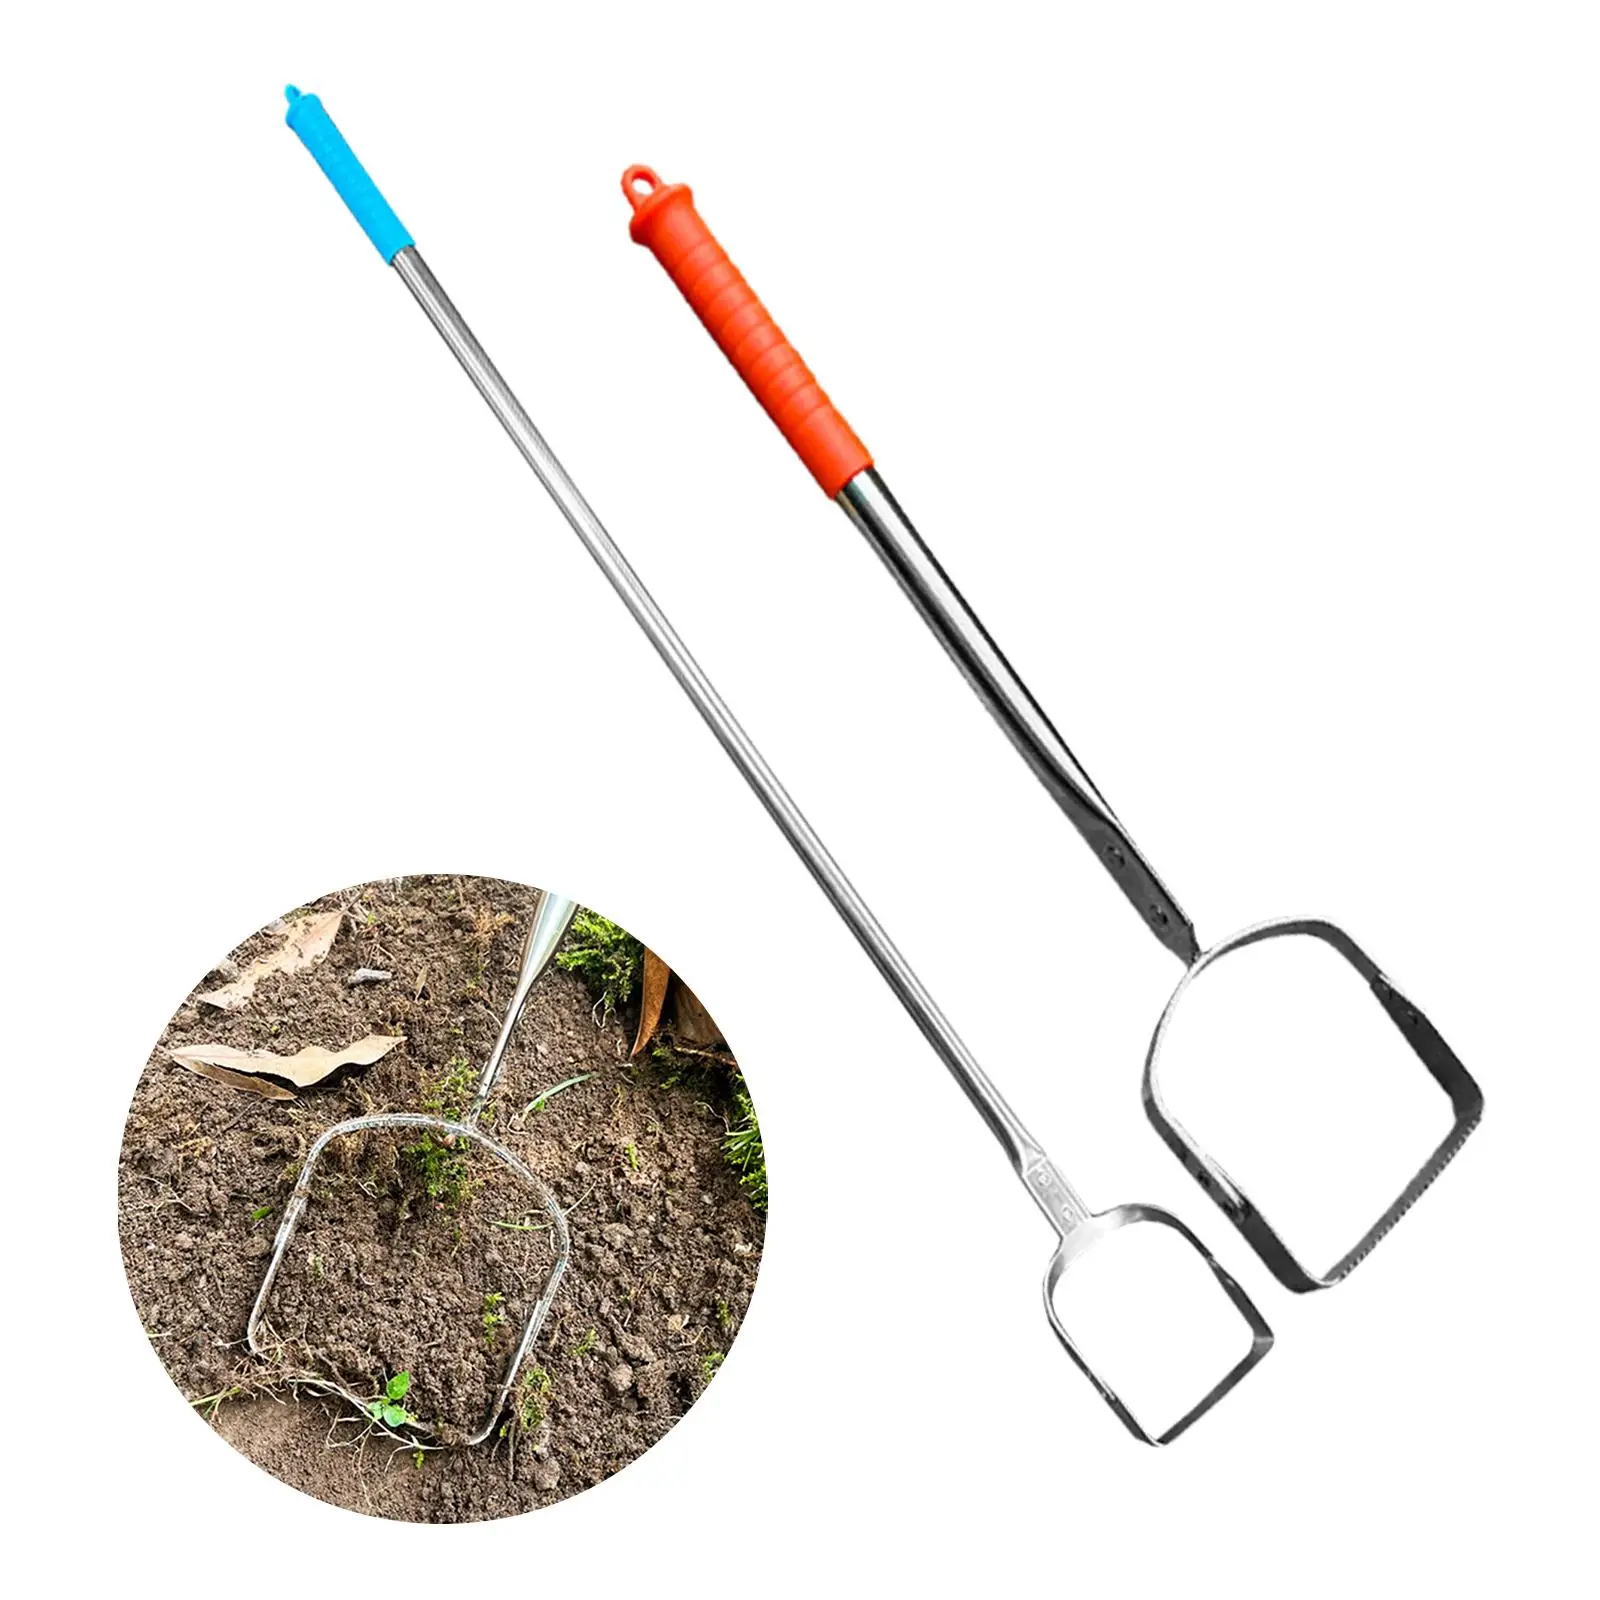 Garden Hoe Tool Long Handle Durable Weeder Cultivator Weeding Rake for Loosening Soil Gardening Vegetables Planting Farm